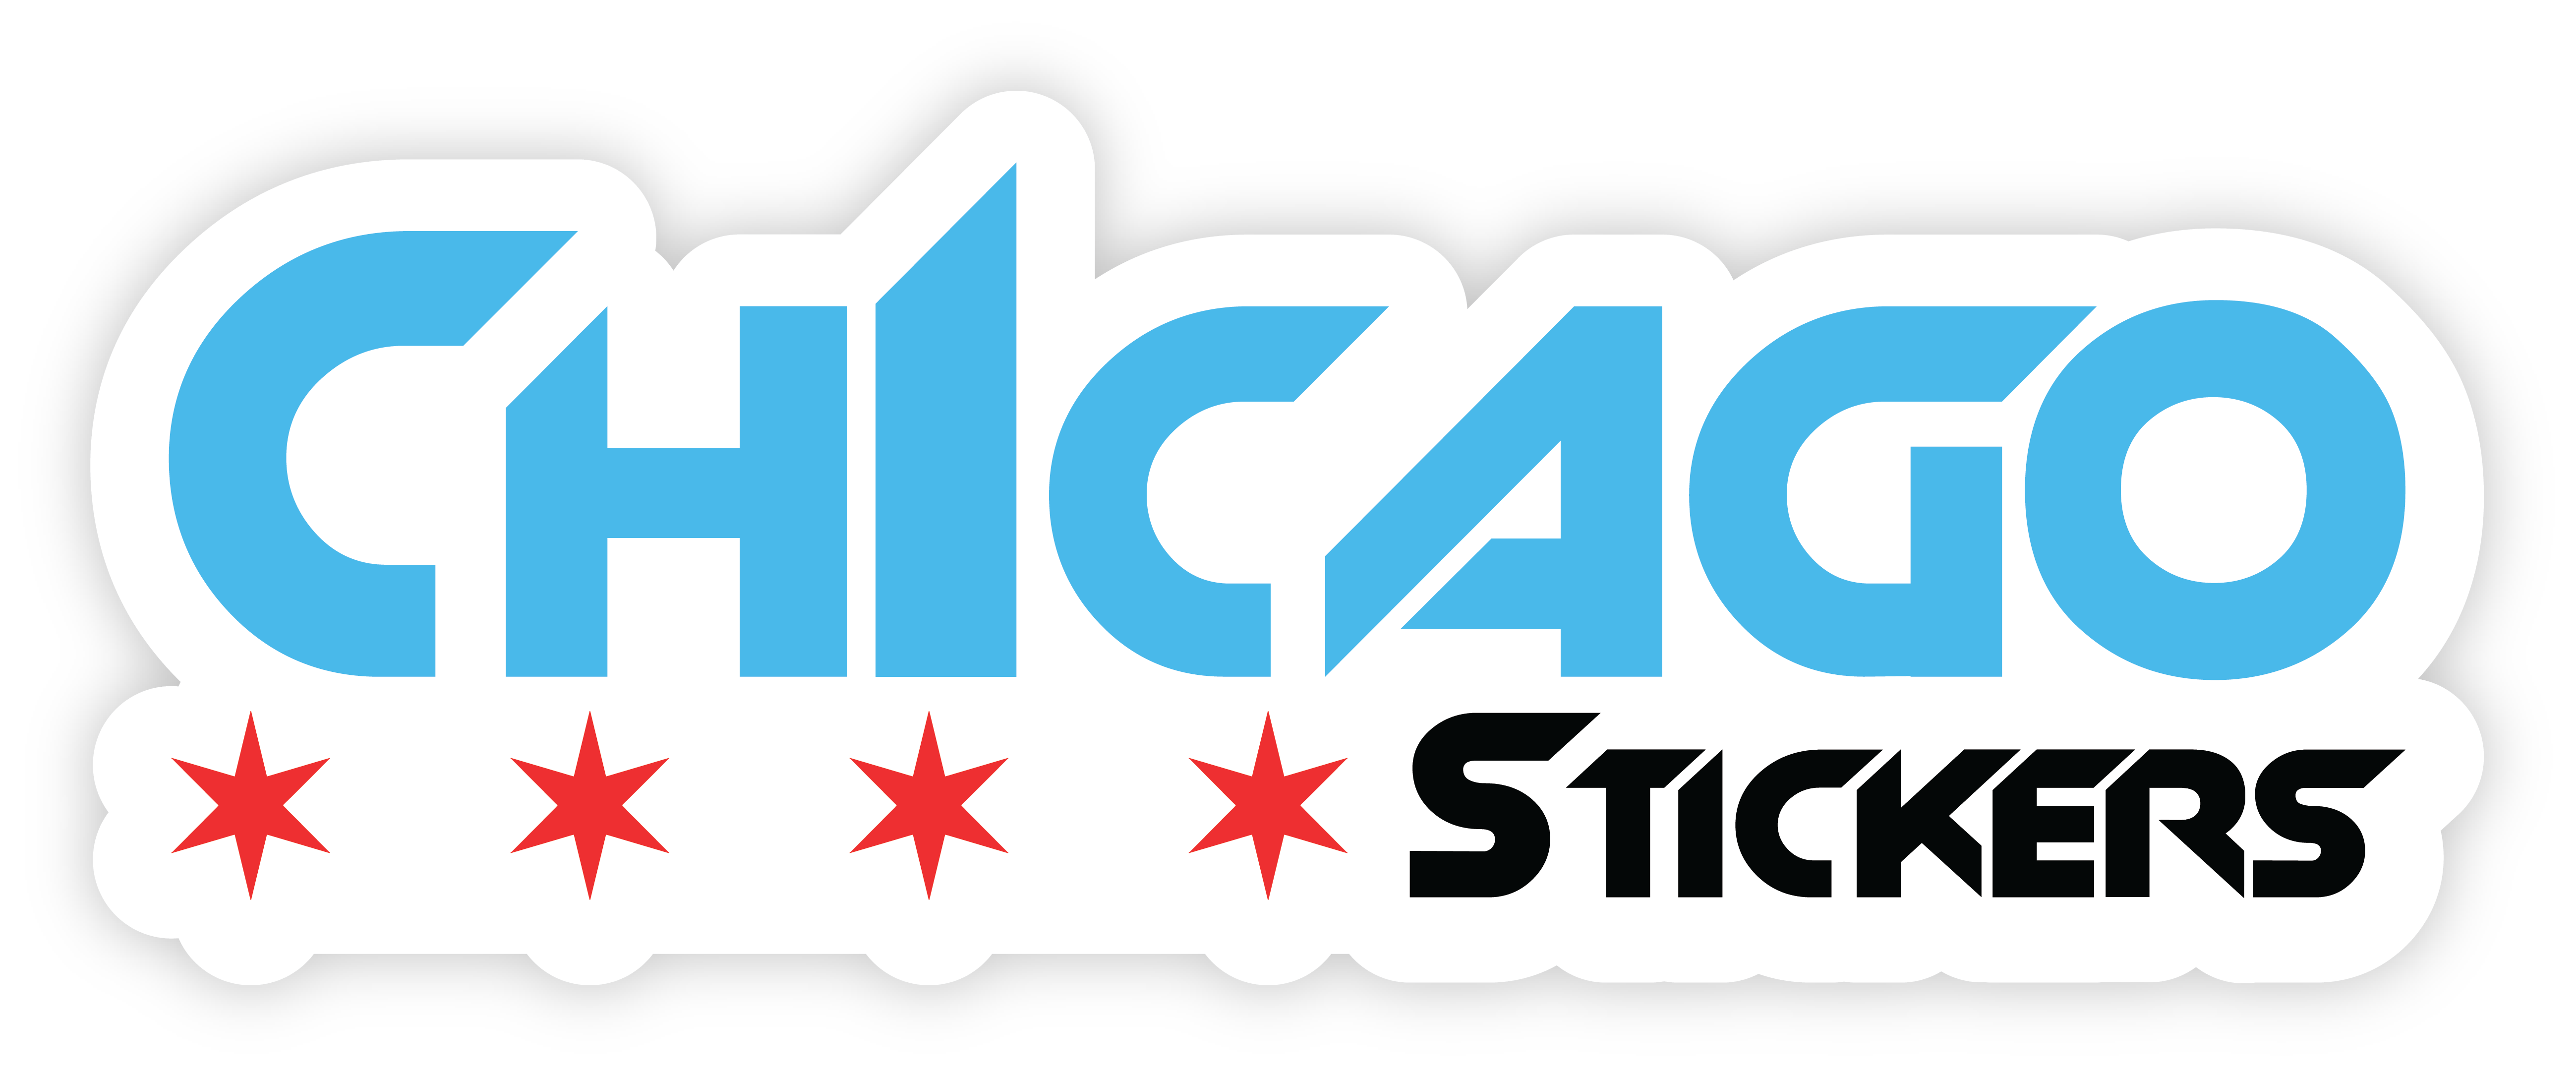 Chicago Stickers – Social & Custom Stickers